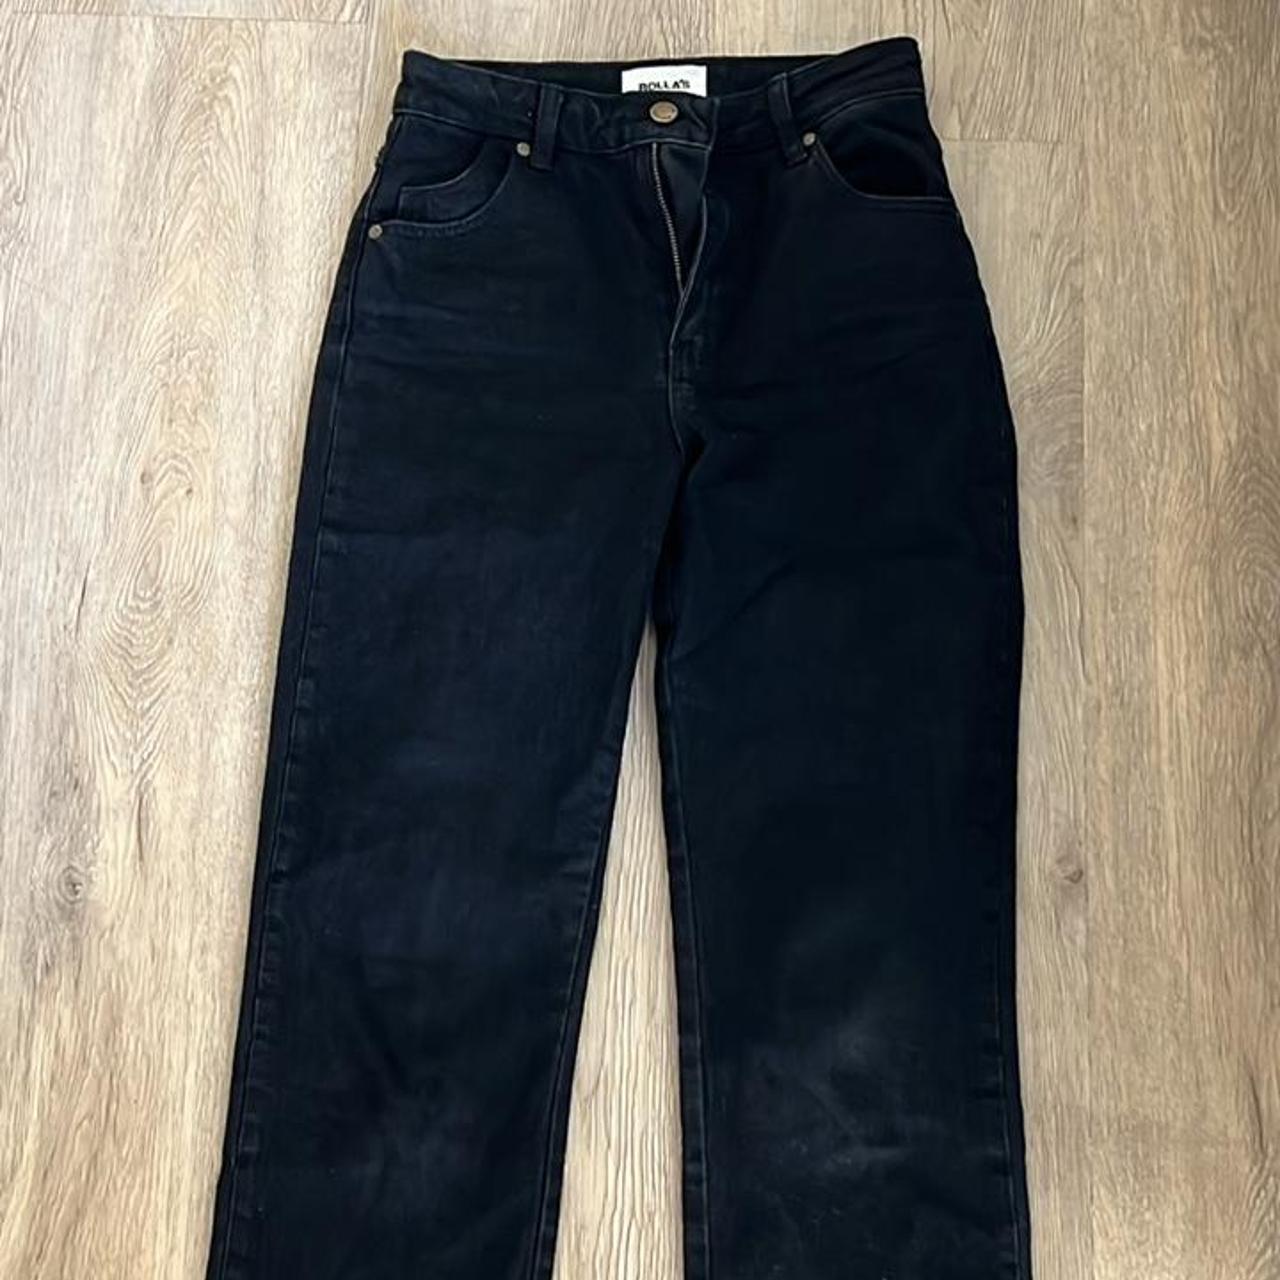 Rollas jeans Worn once Size 6/8 Straight leg... - Depop